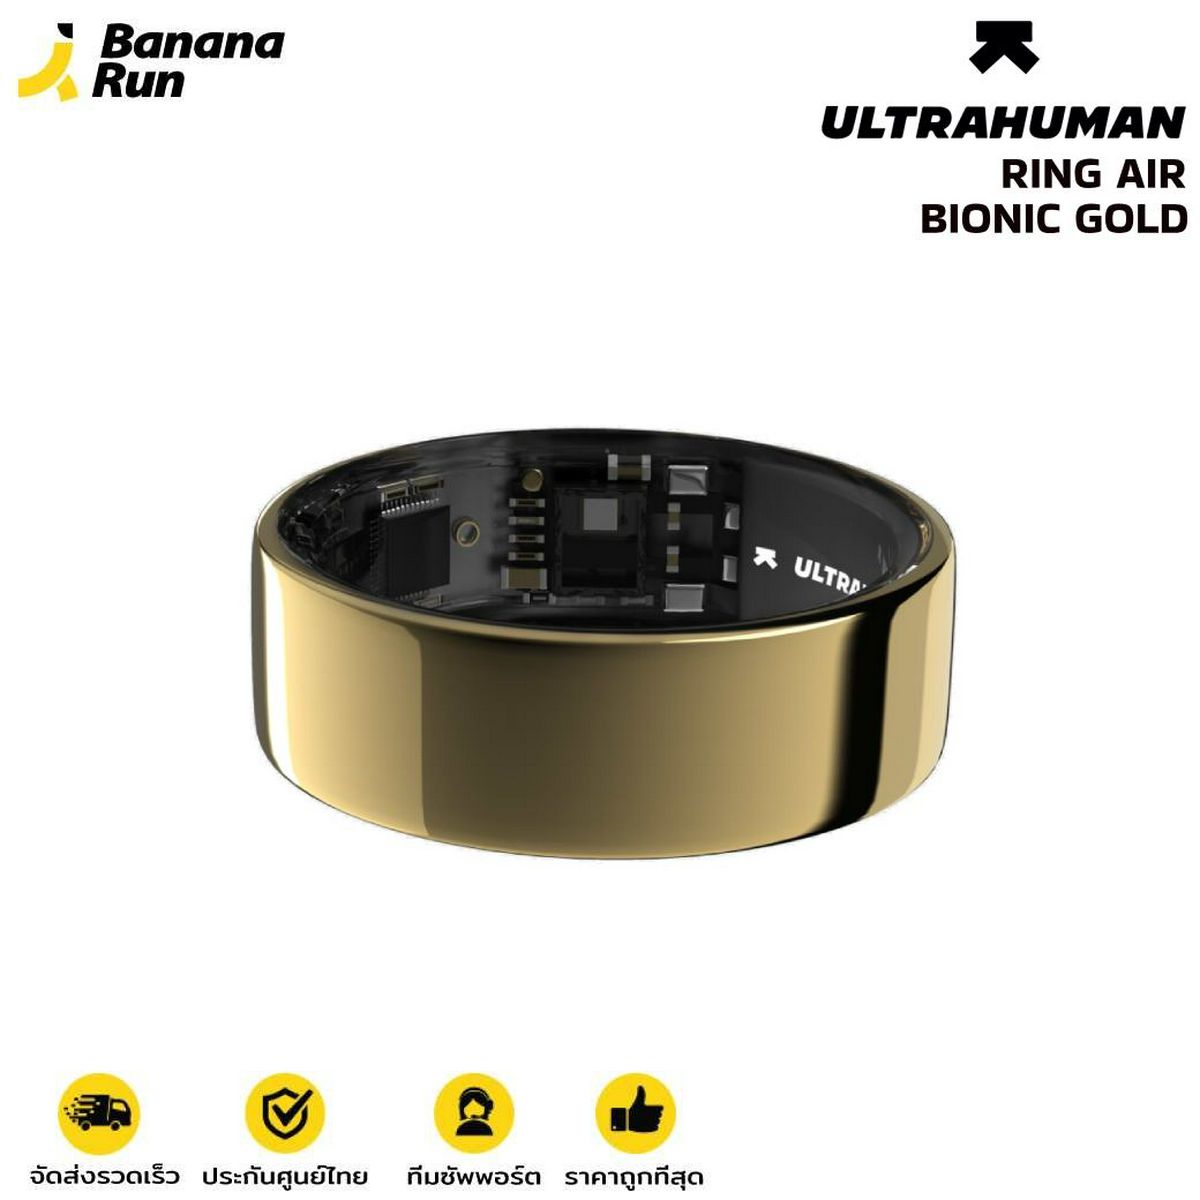 Ultrahuman Ring Air Bionic Gold